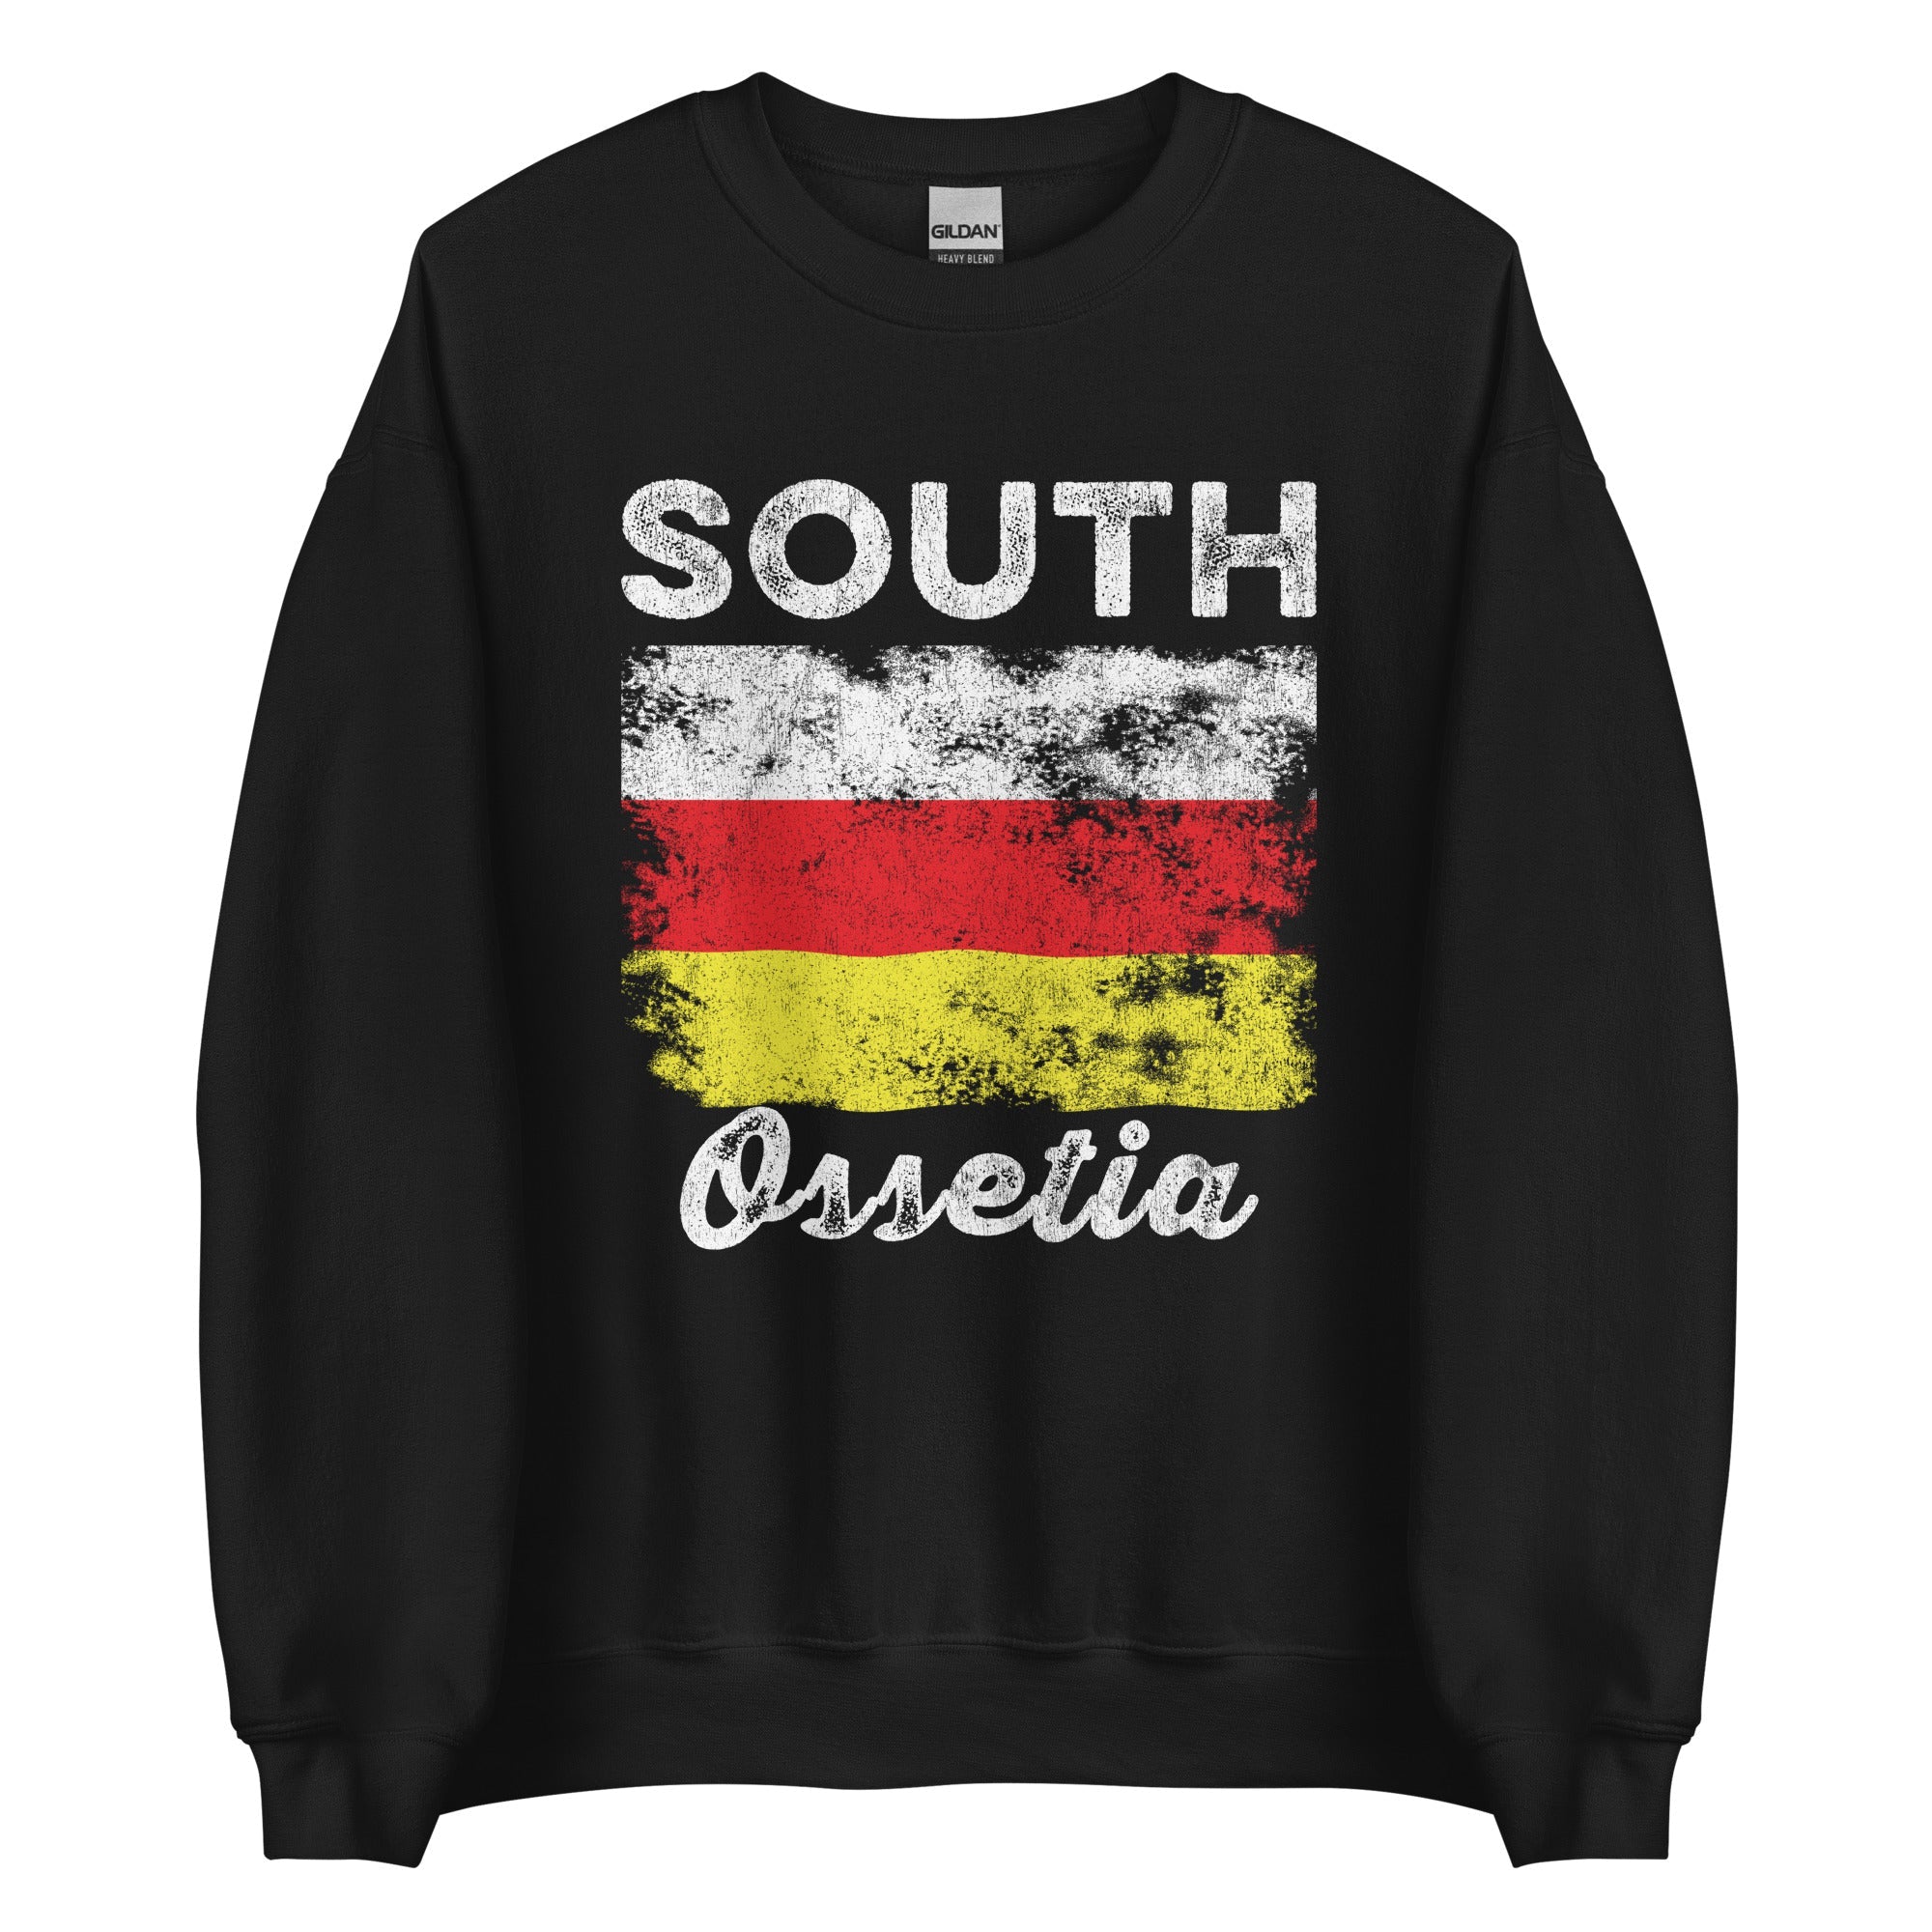 South Ossetia Flag Distressed Sweatshirt